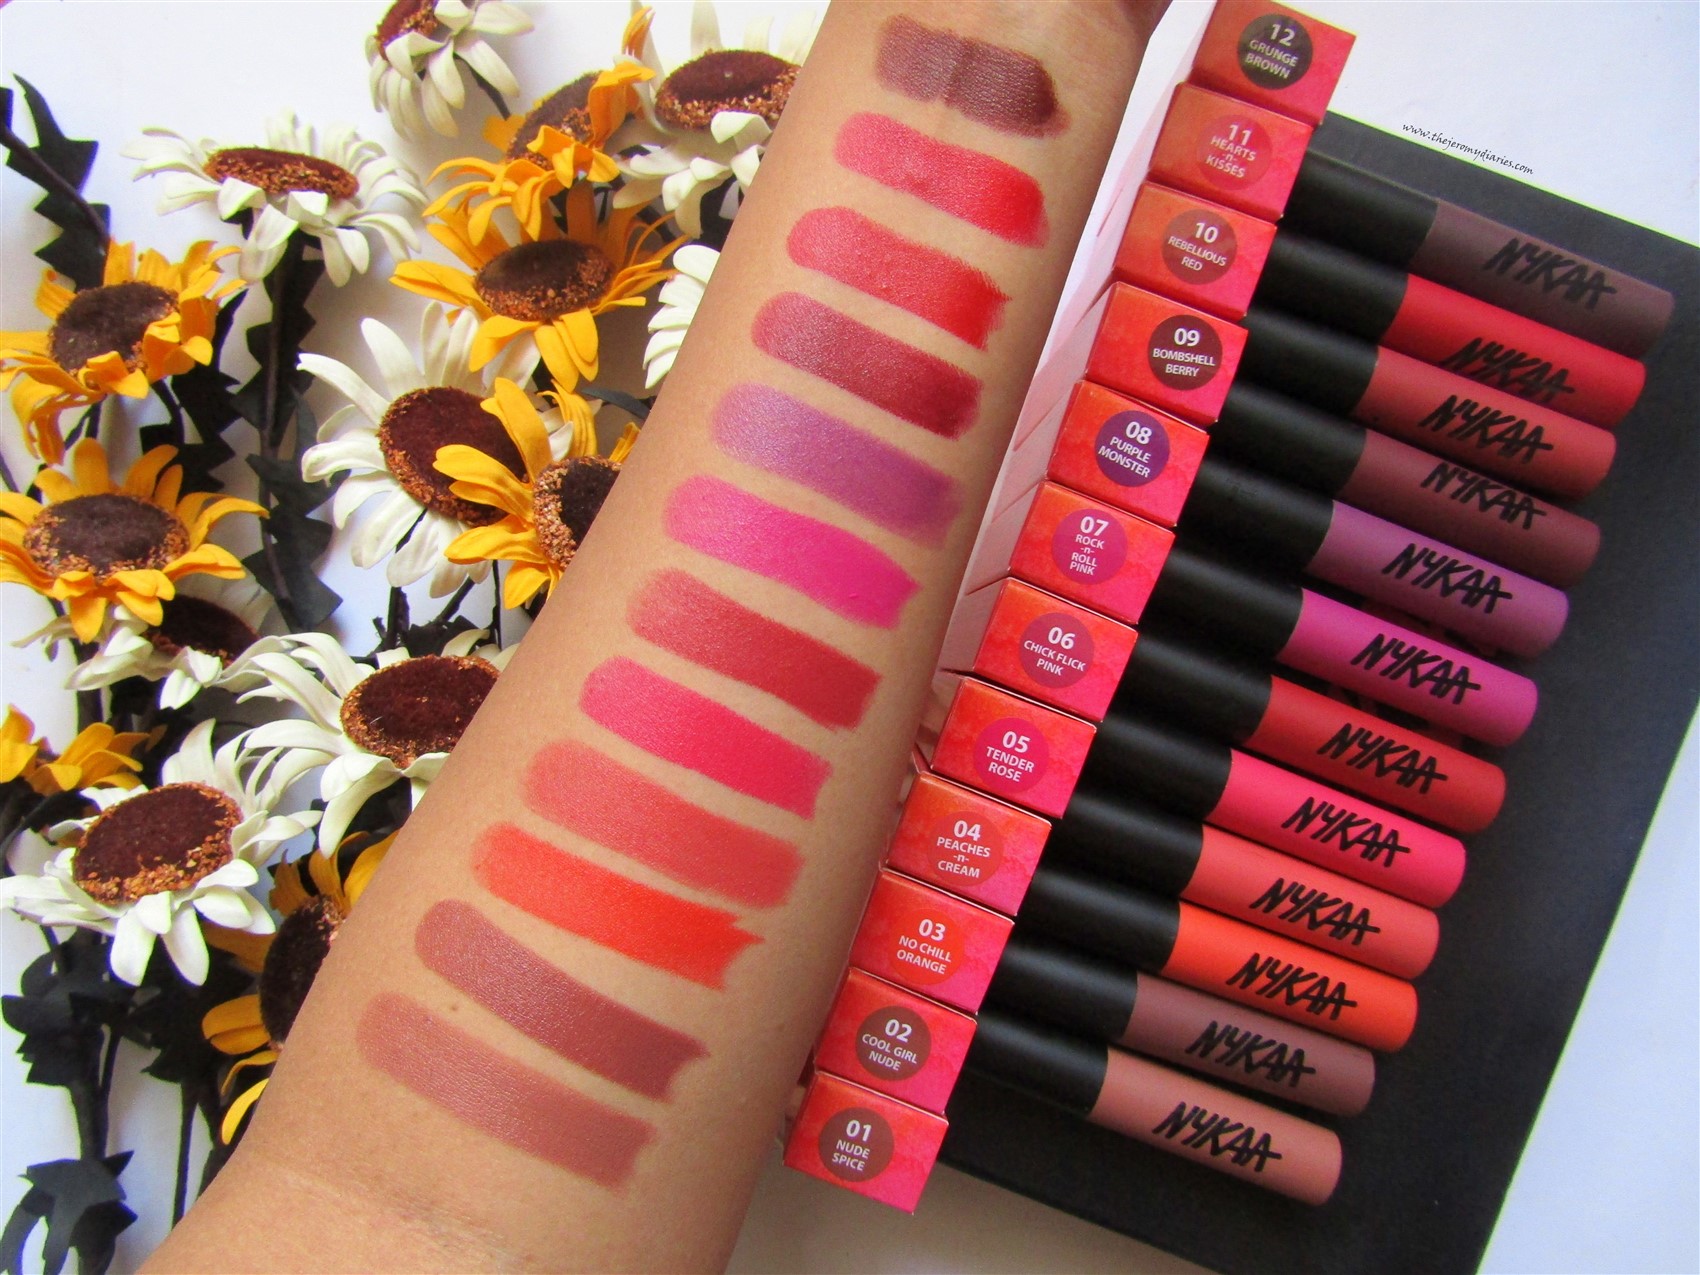 nykaa paintstix lipstick swatches 12 shades the jeromy diaries